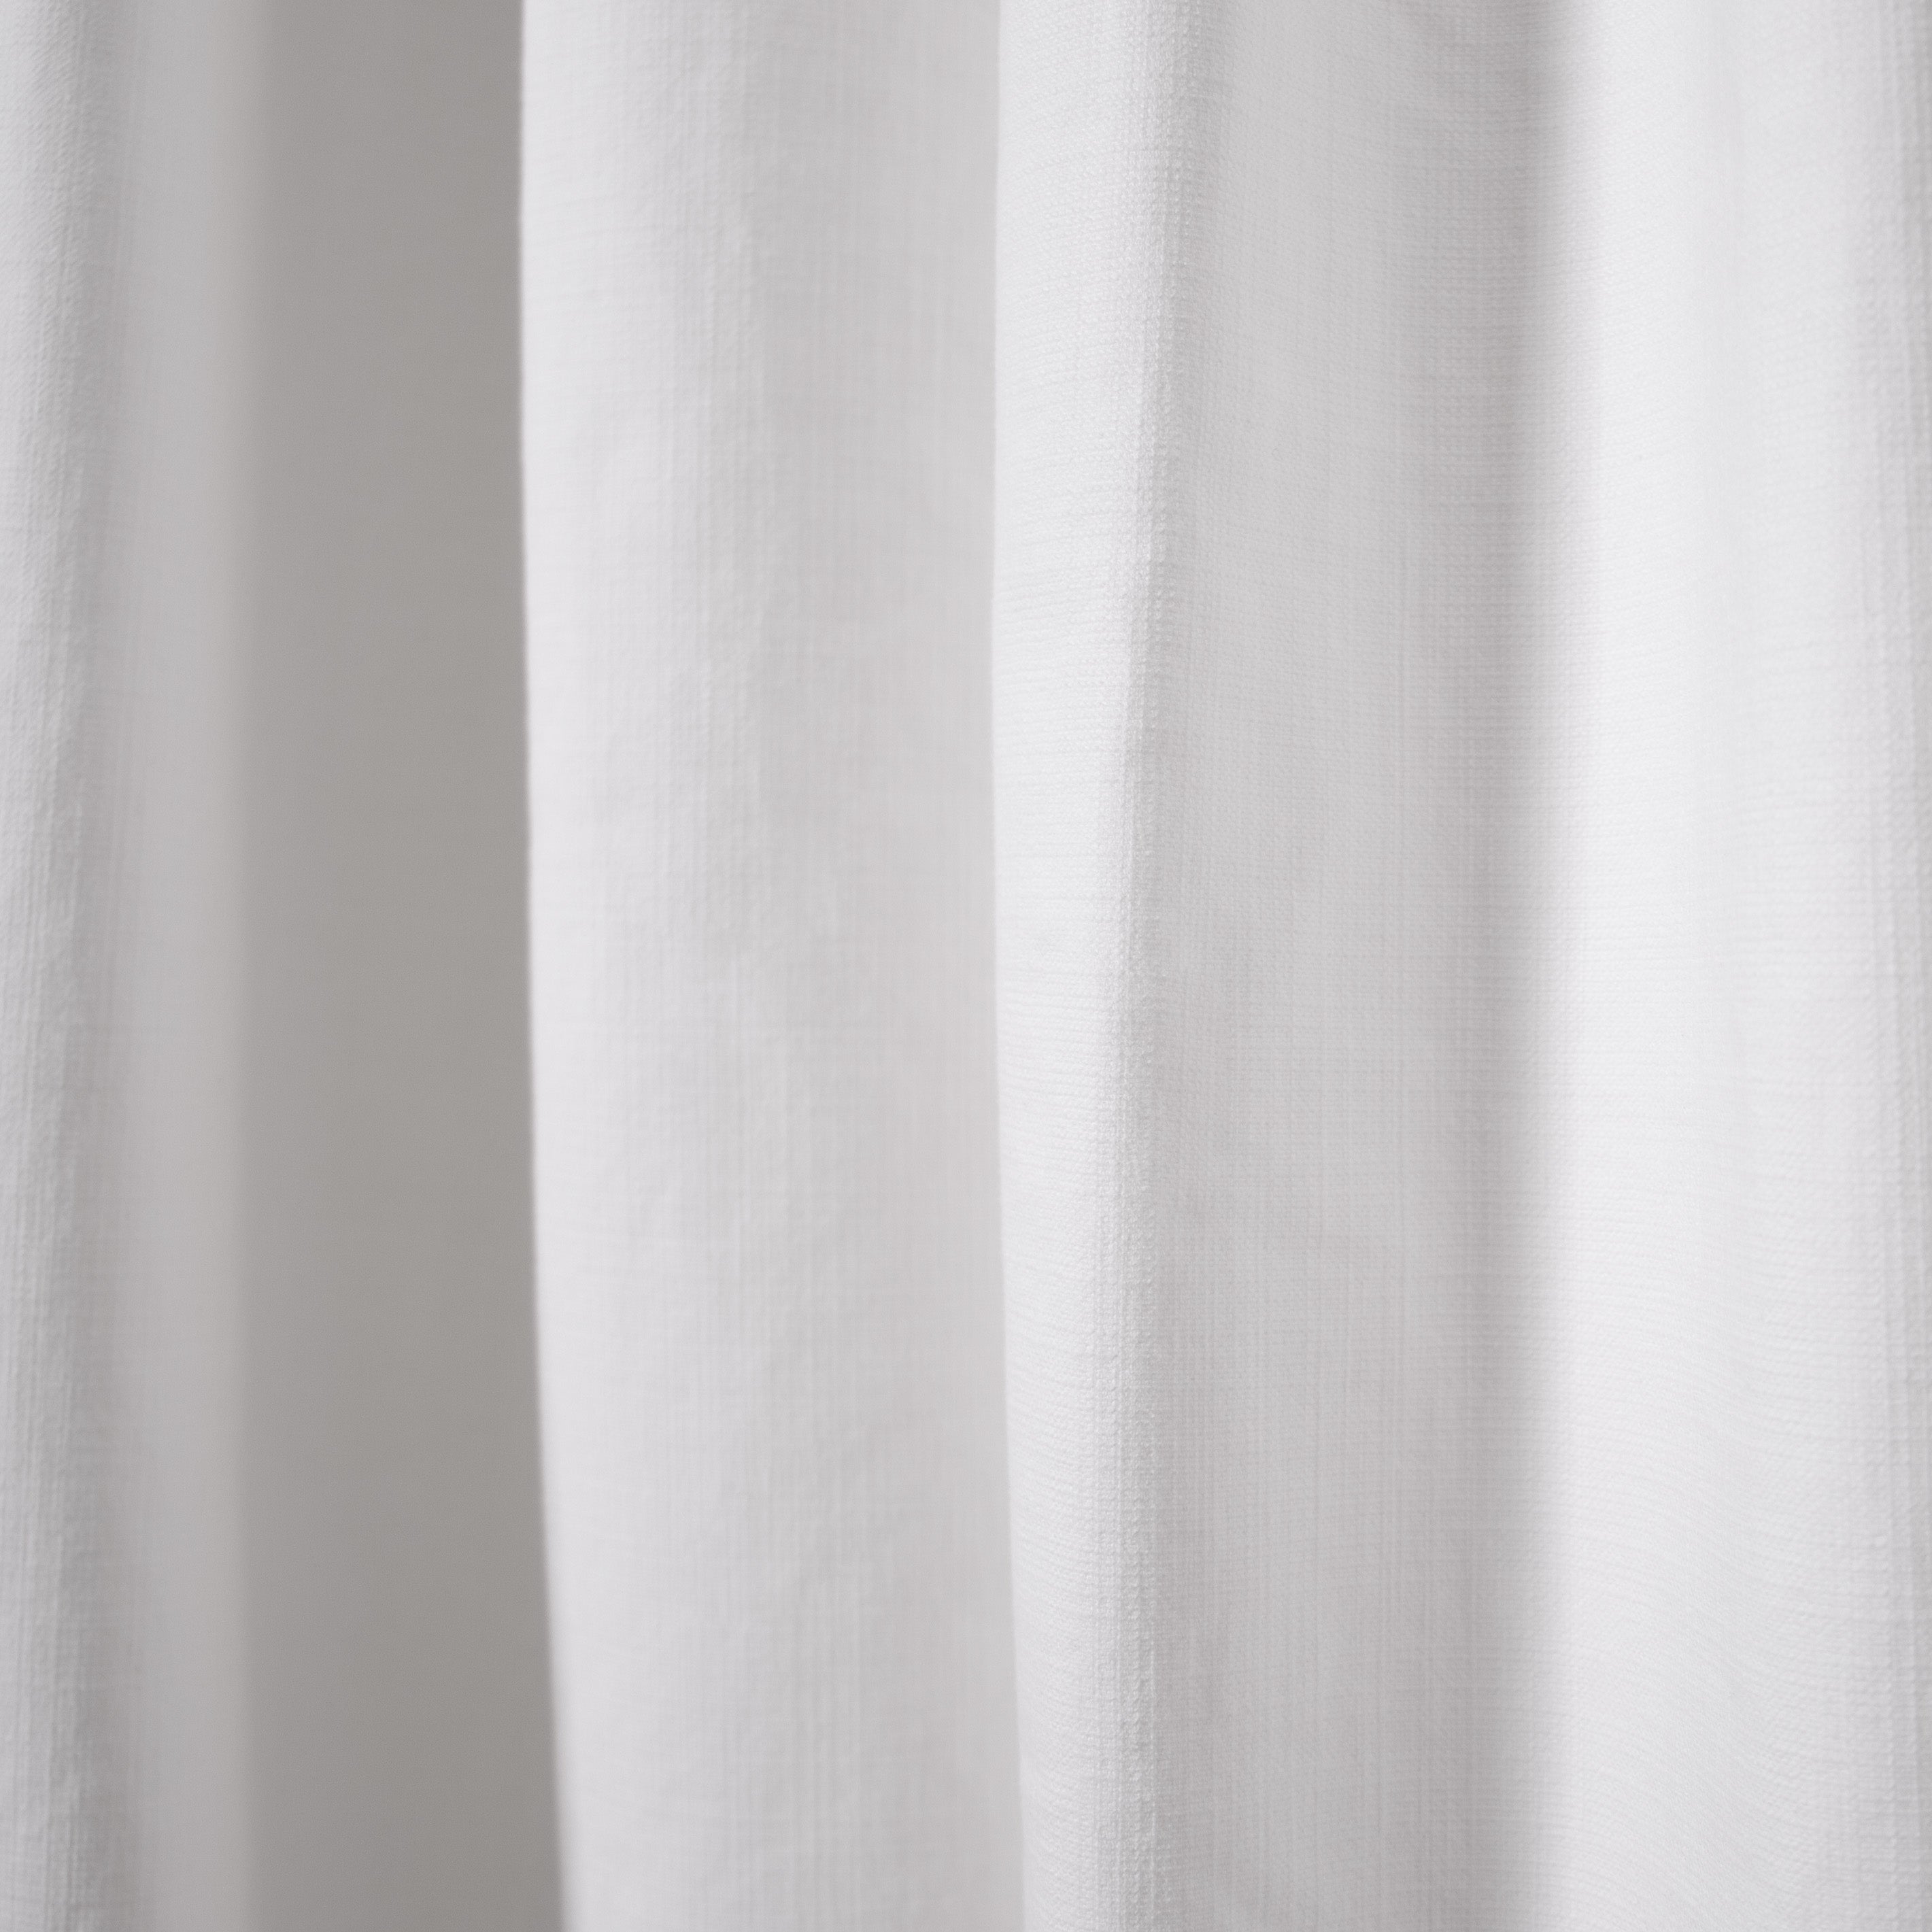 White Cotton Curtain Close-up